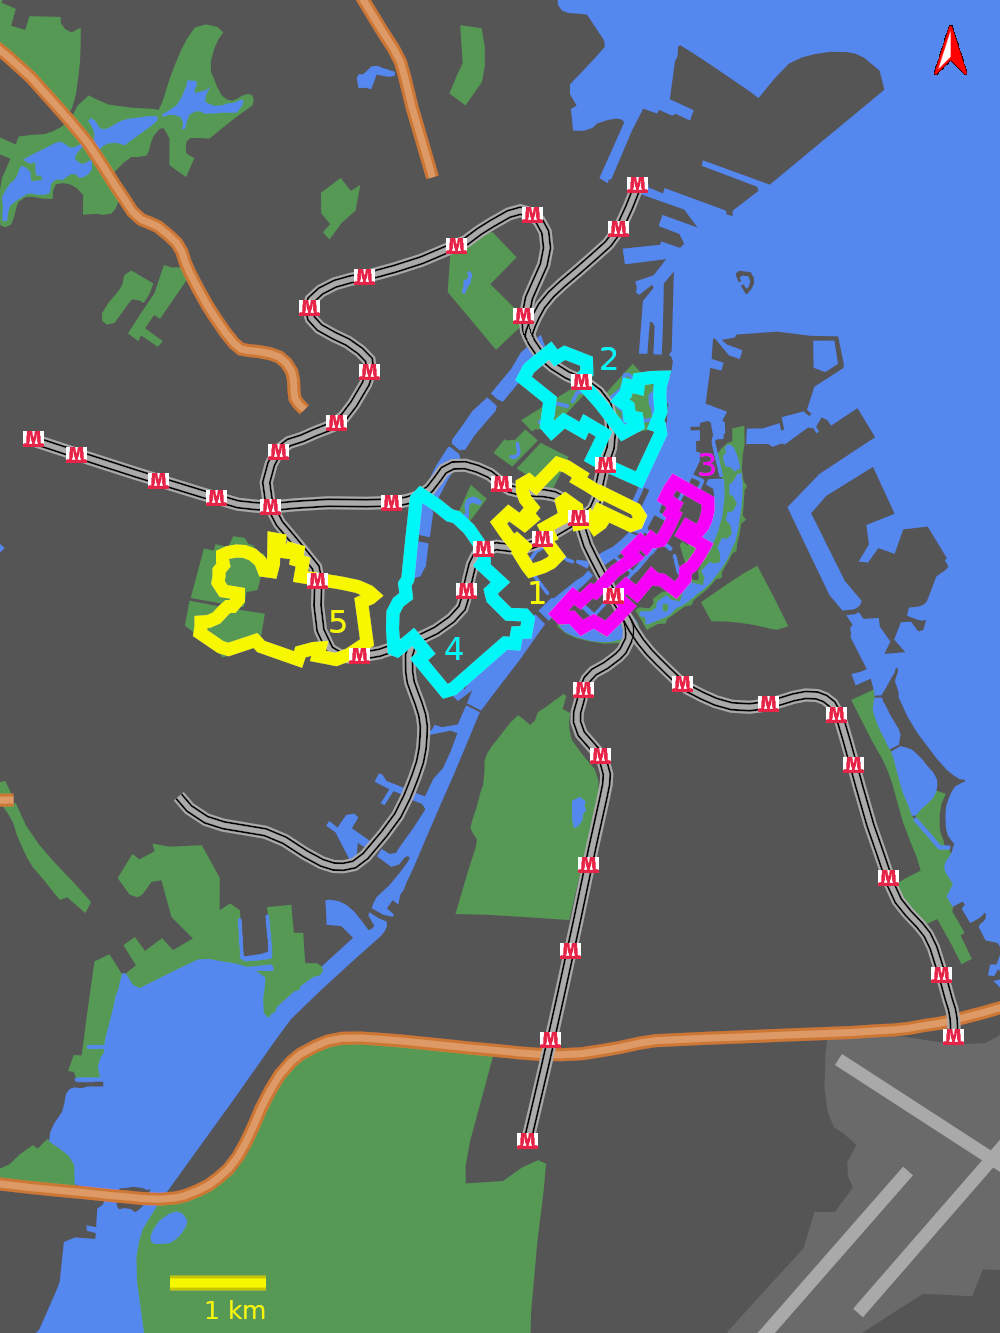 Map for the Copenhagen walking tours